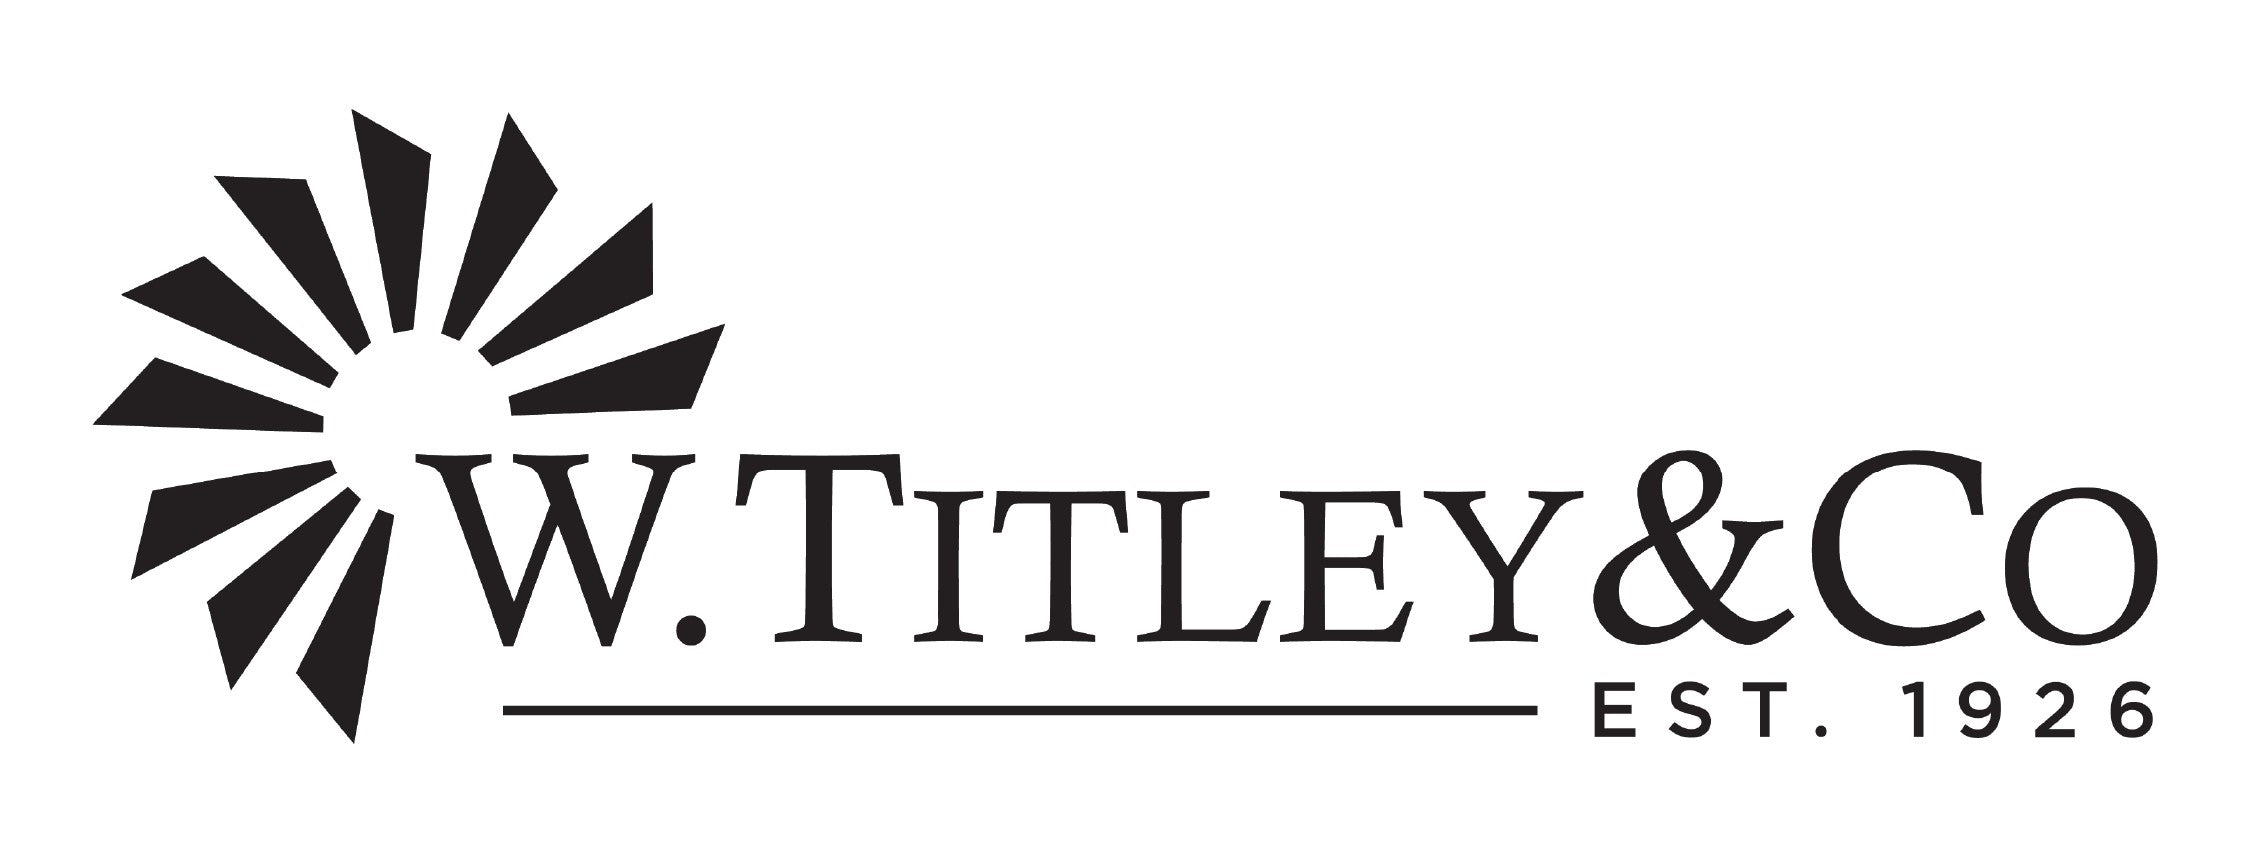 W. Titley & Co.